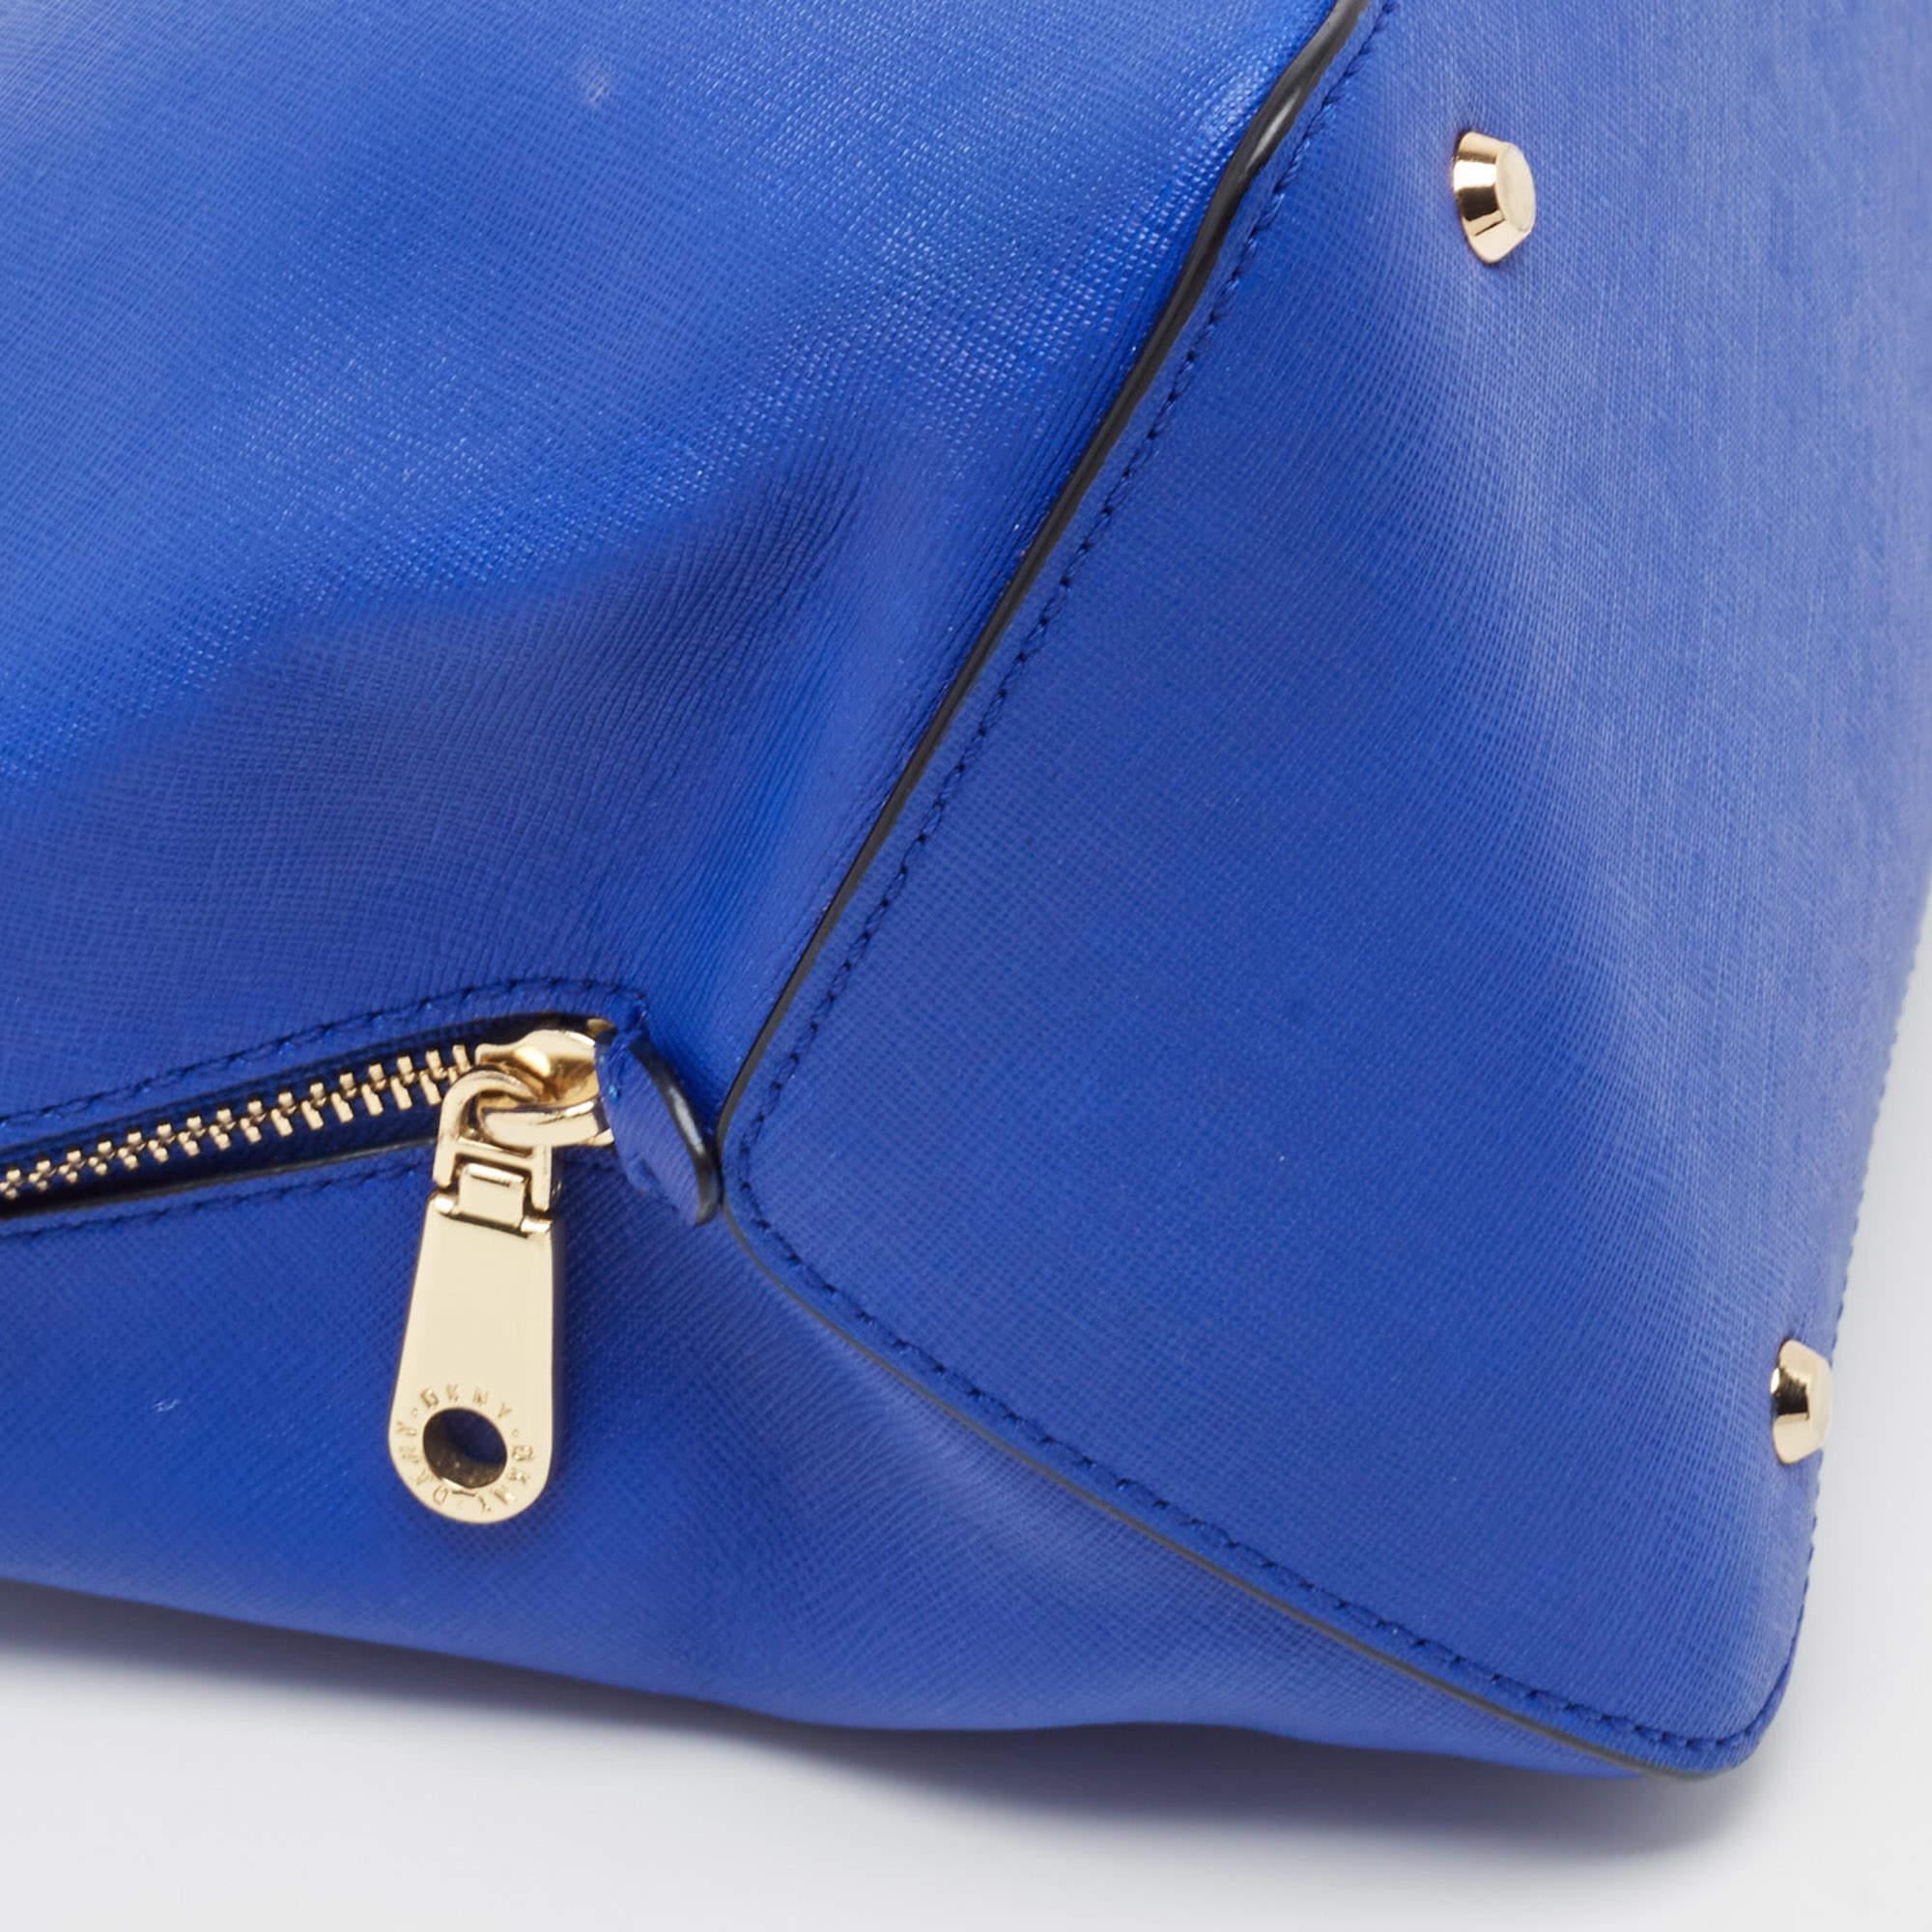 Dkny Blue Saffiano Leather Dome Shoulder Bag 10